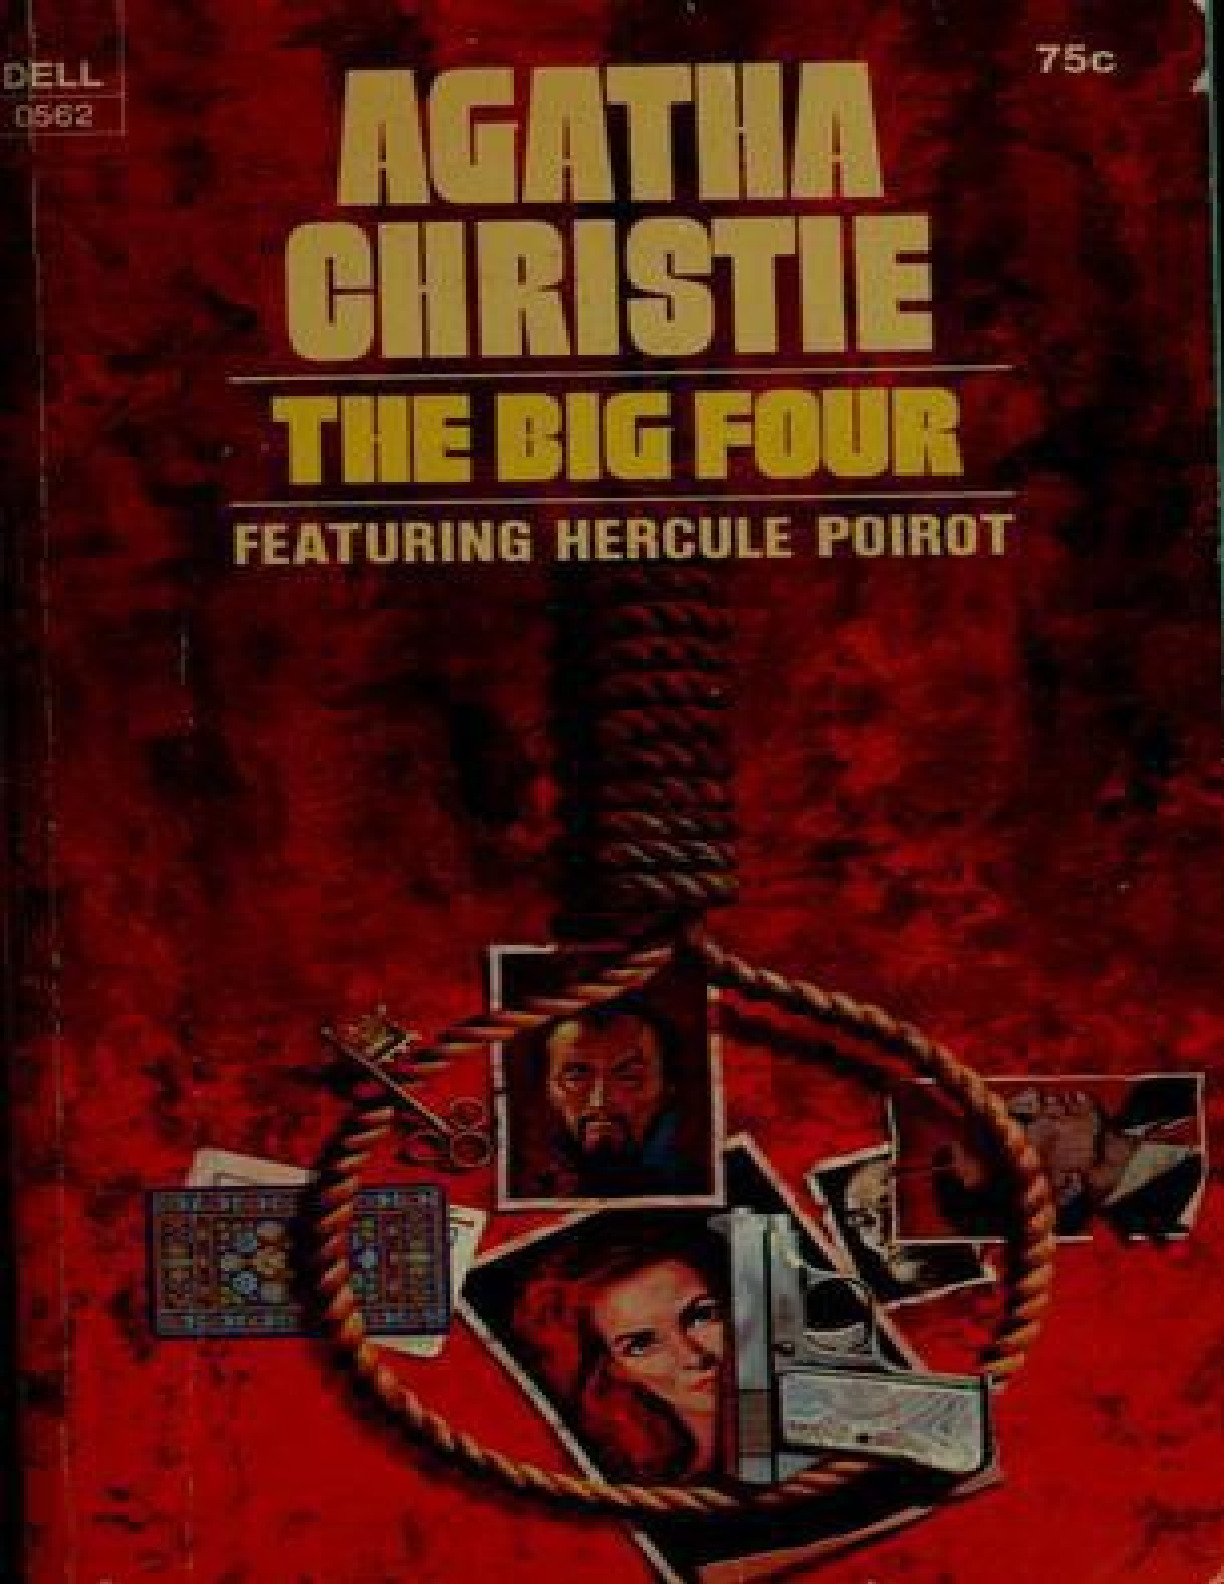 Big Four, The – Agatha Christie